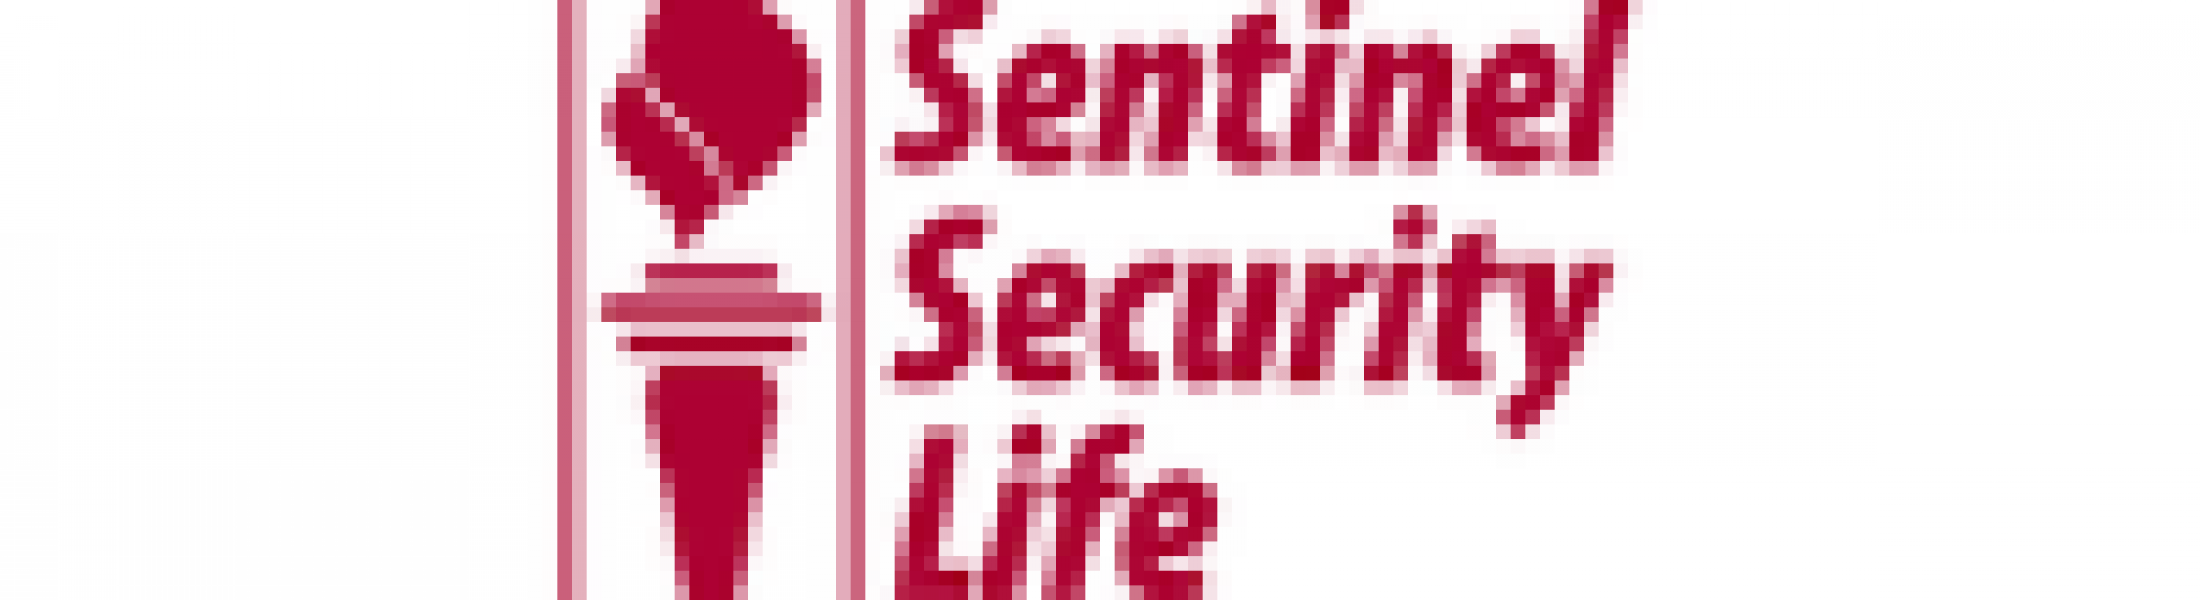 sentinel security life credit rating